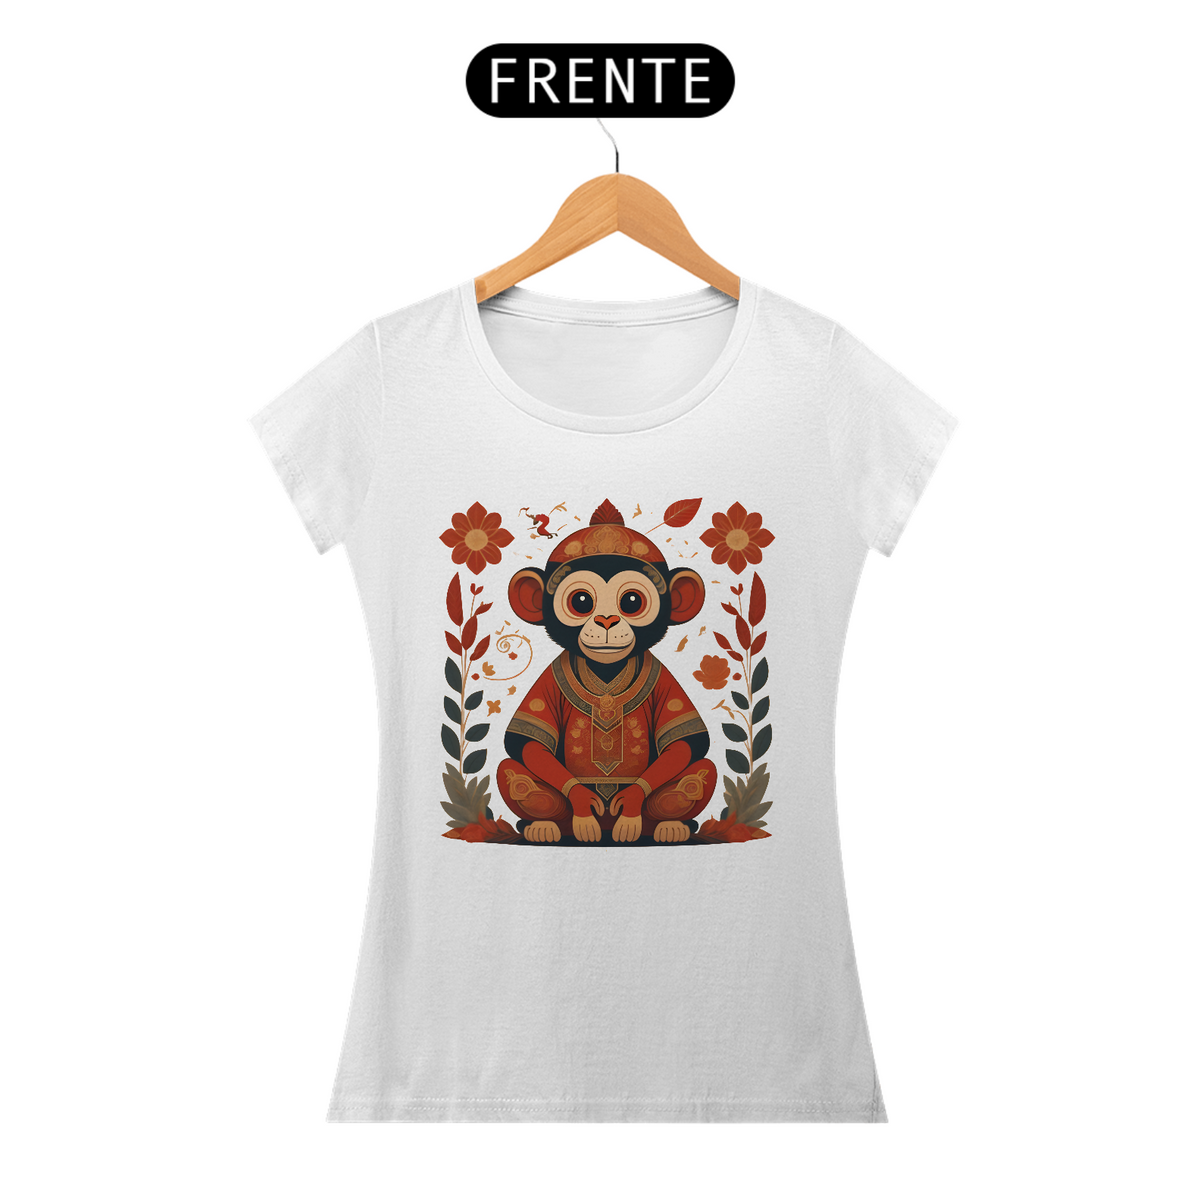 Nome do produto: Chinese New Year - T-Shirt Baby Look Monkey Monk